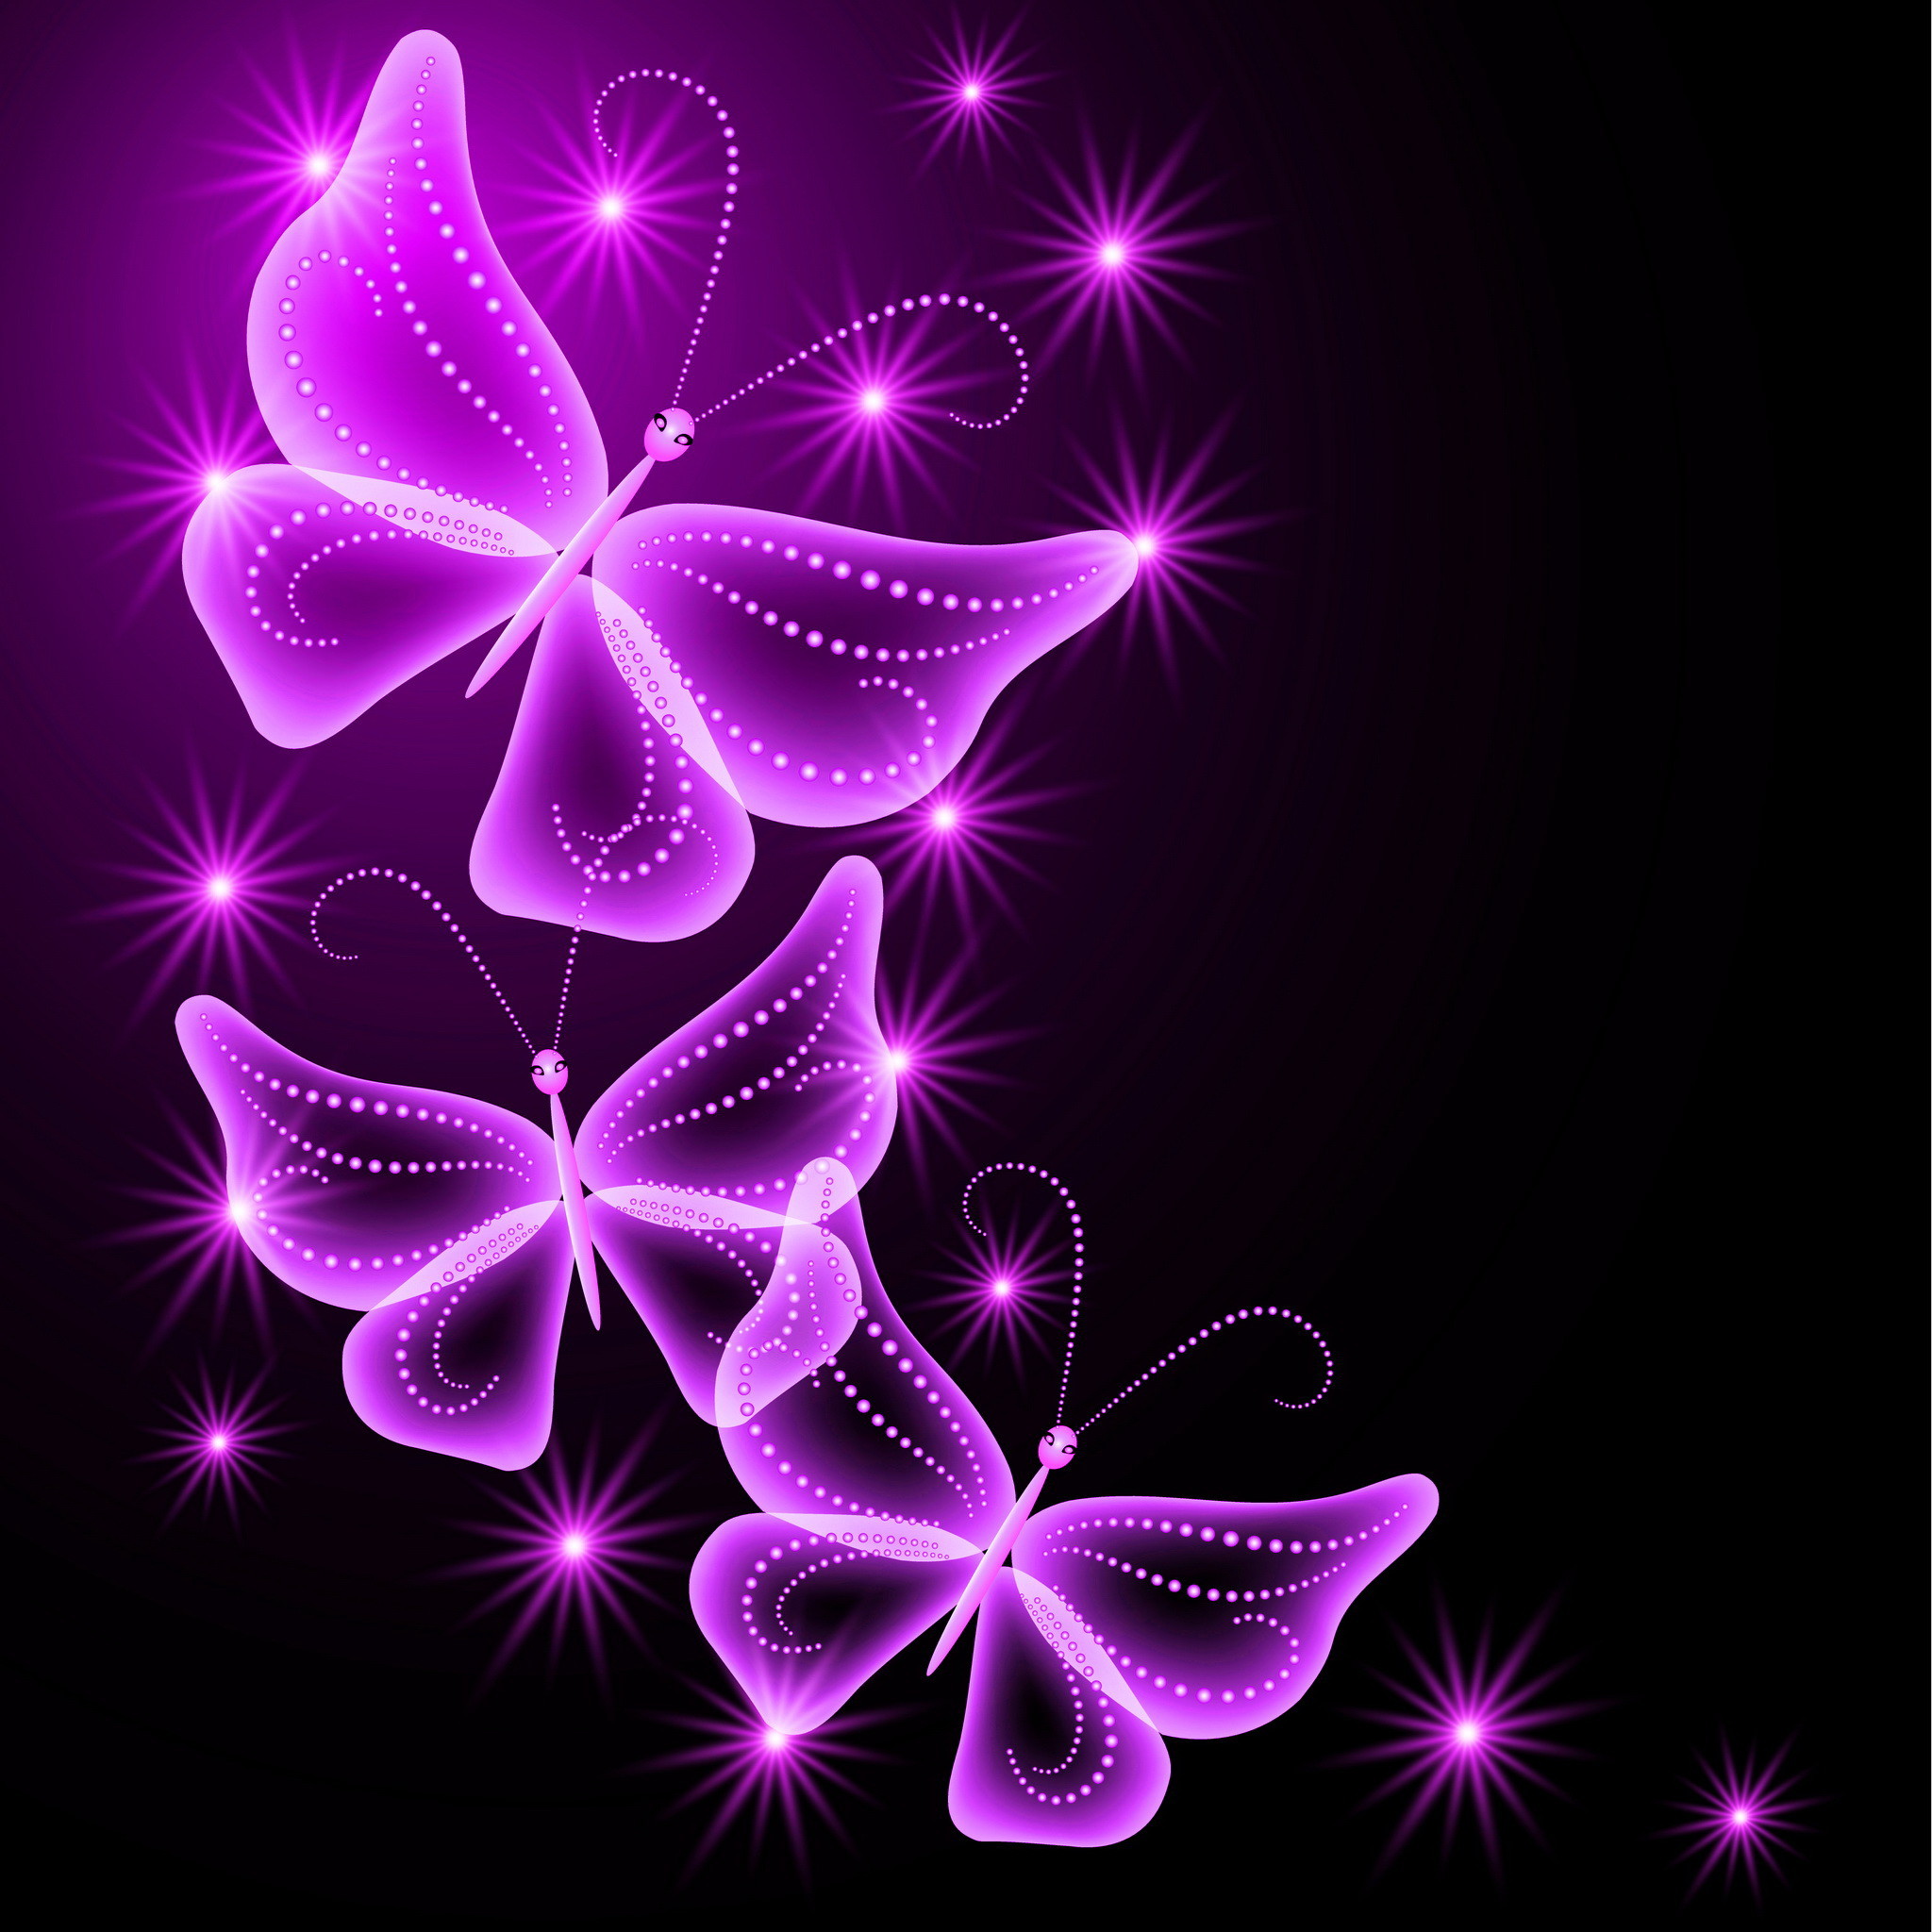 ipad mini wallpaper tumblr,purple,violet,pink,butterfly,neon